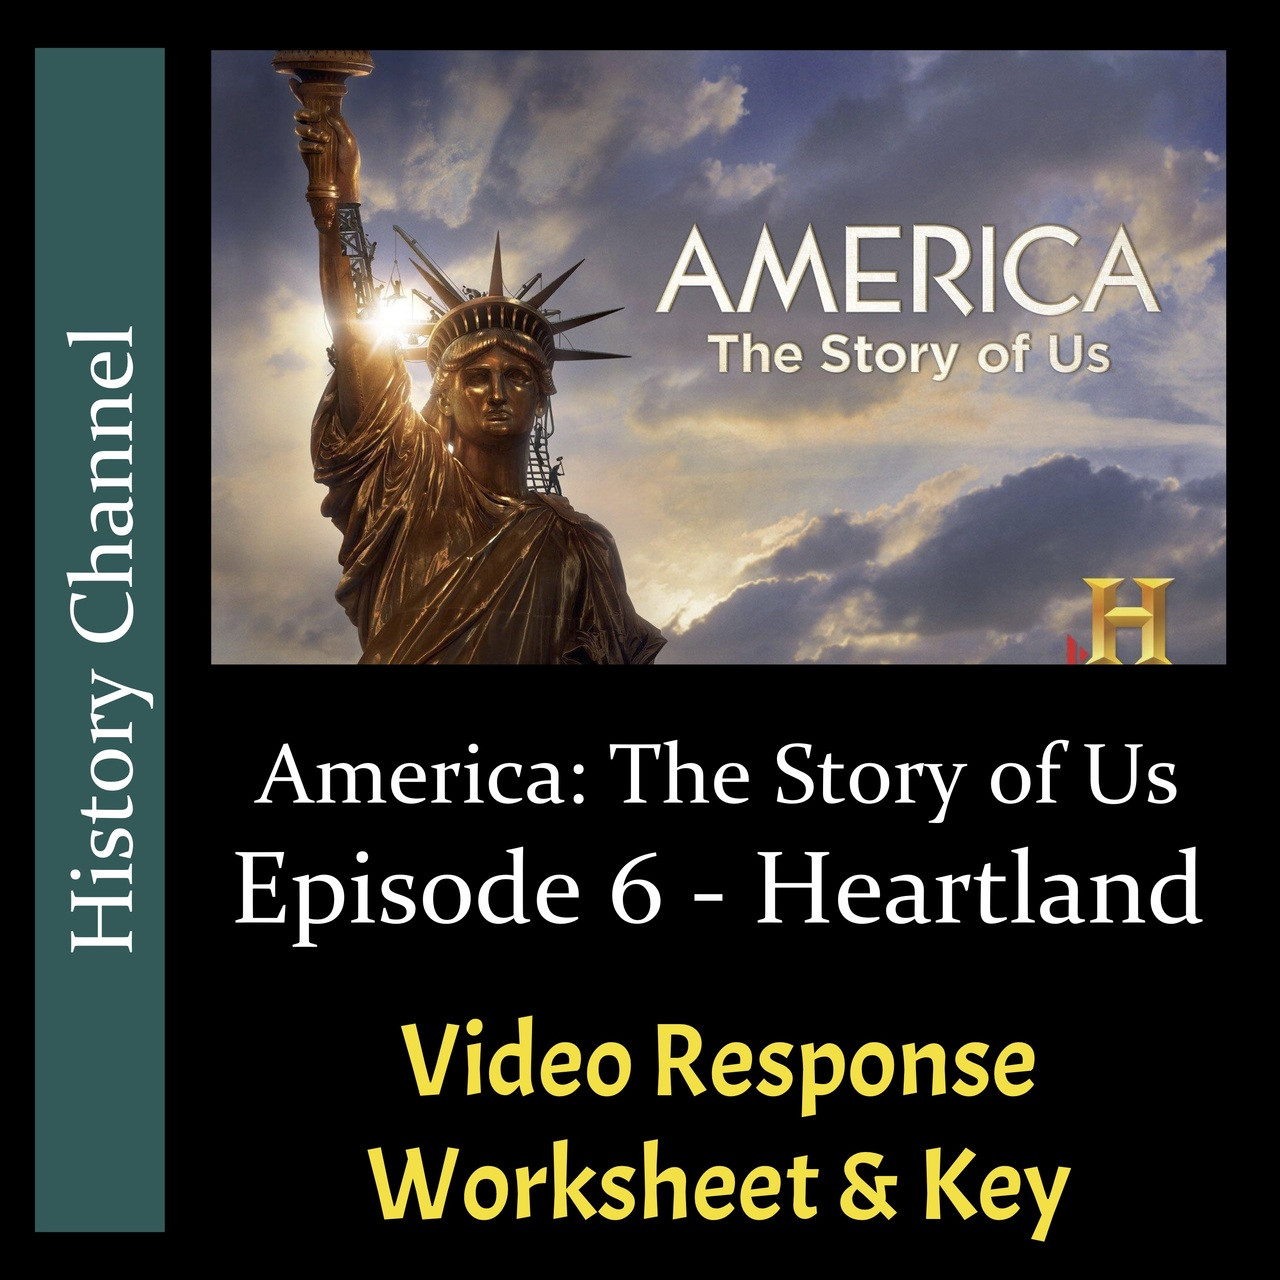 america-the-story-of-us-episode-6-heartland-video-response-worksheet-key-editable